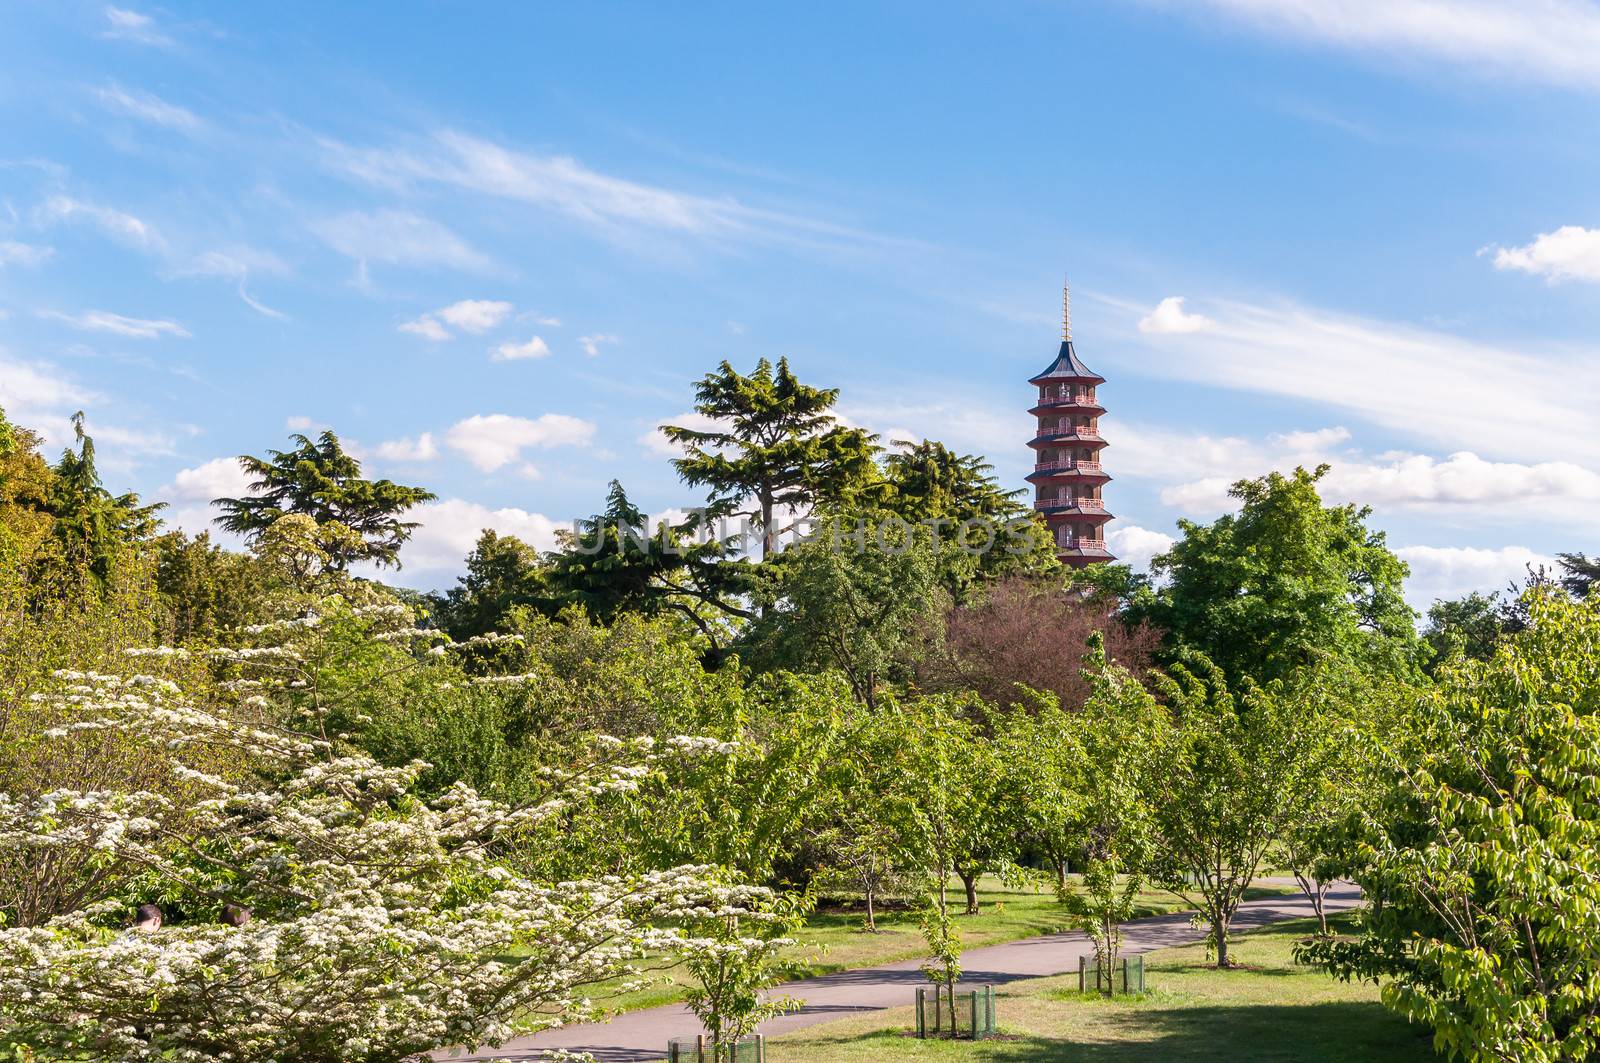 Trees, alley and Pagoda in Royal Botanic Gardens, Kew, London, England.